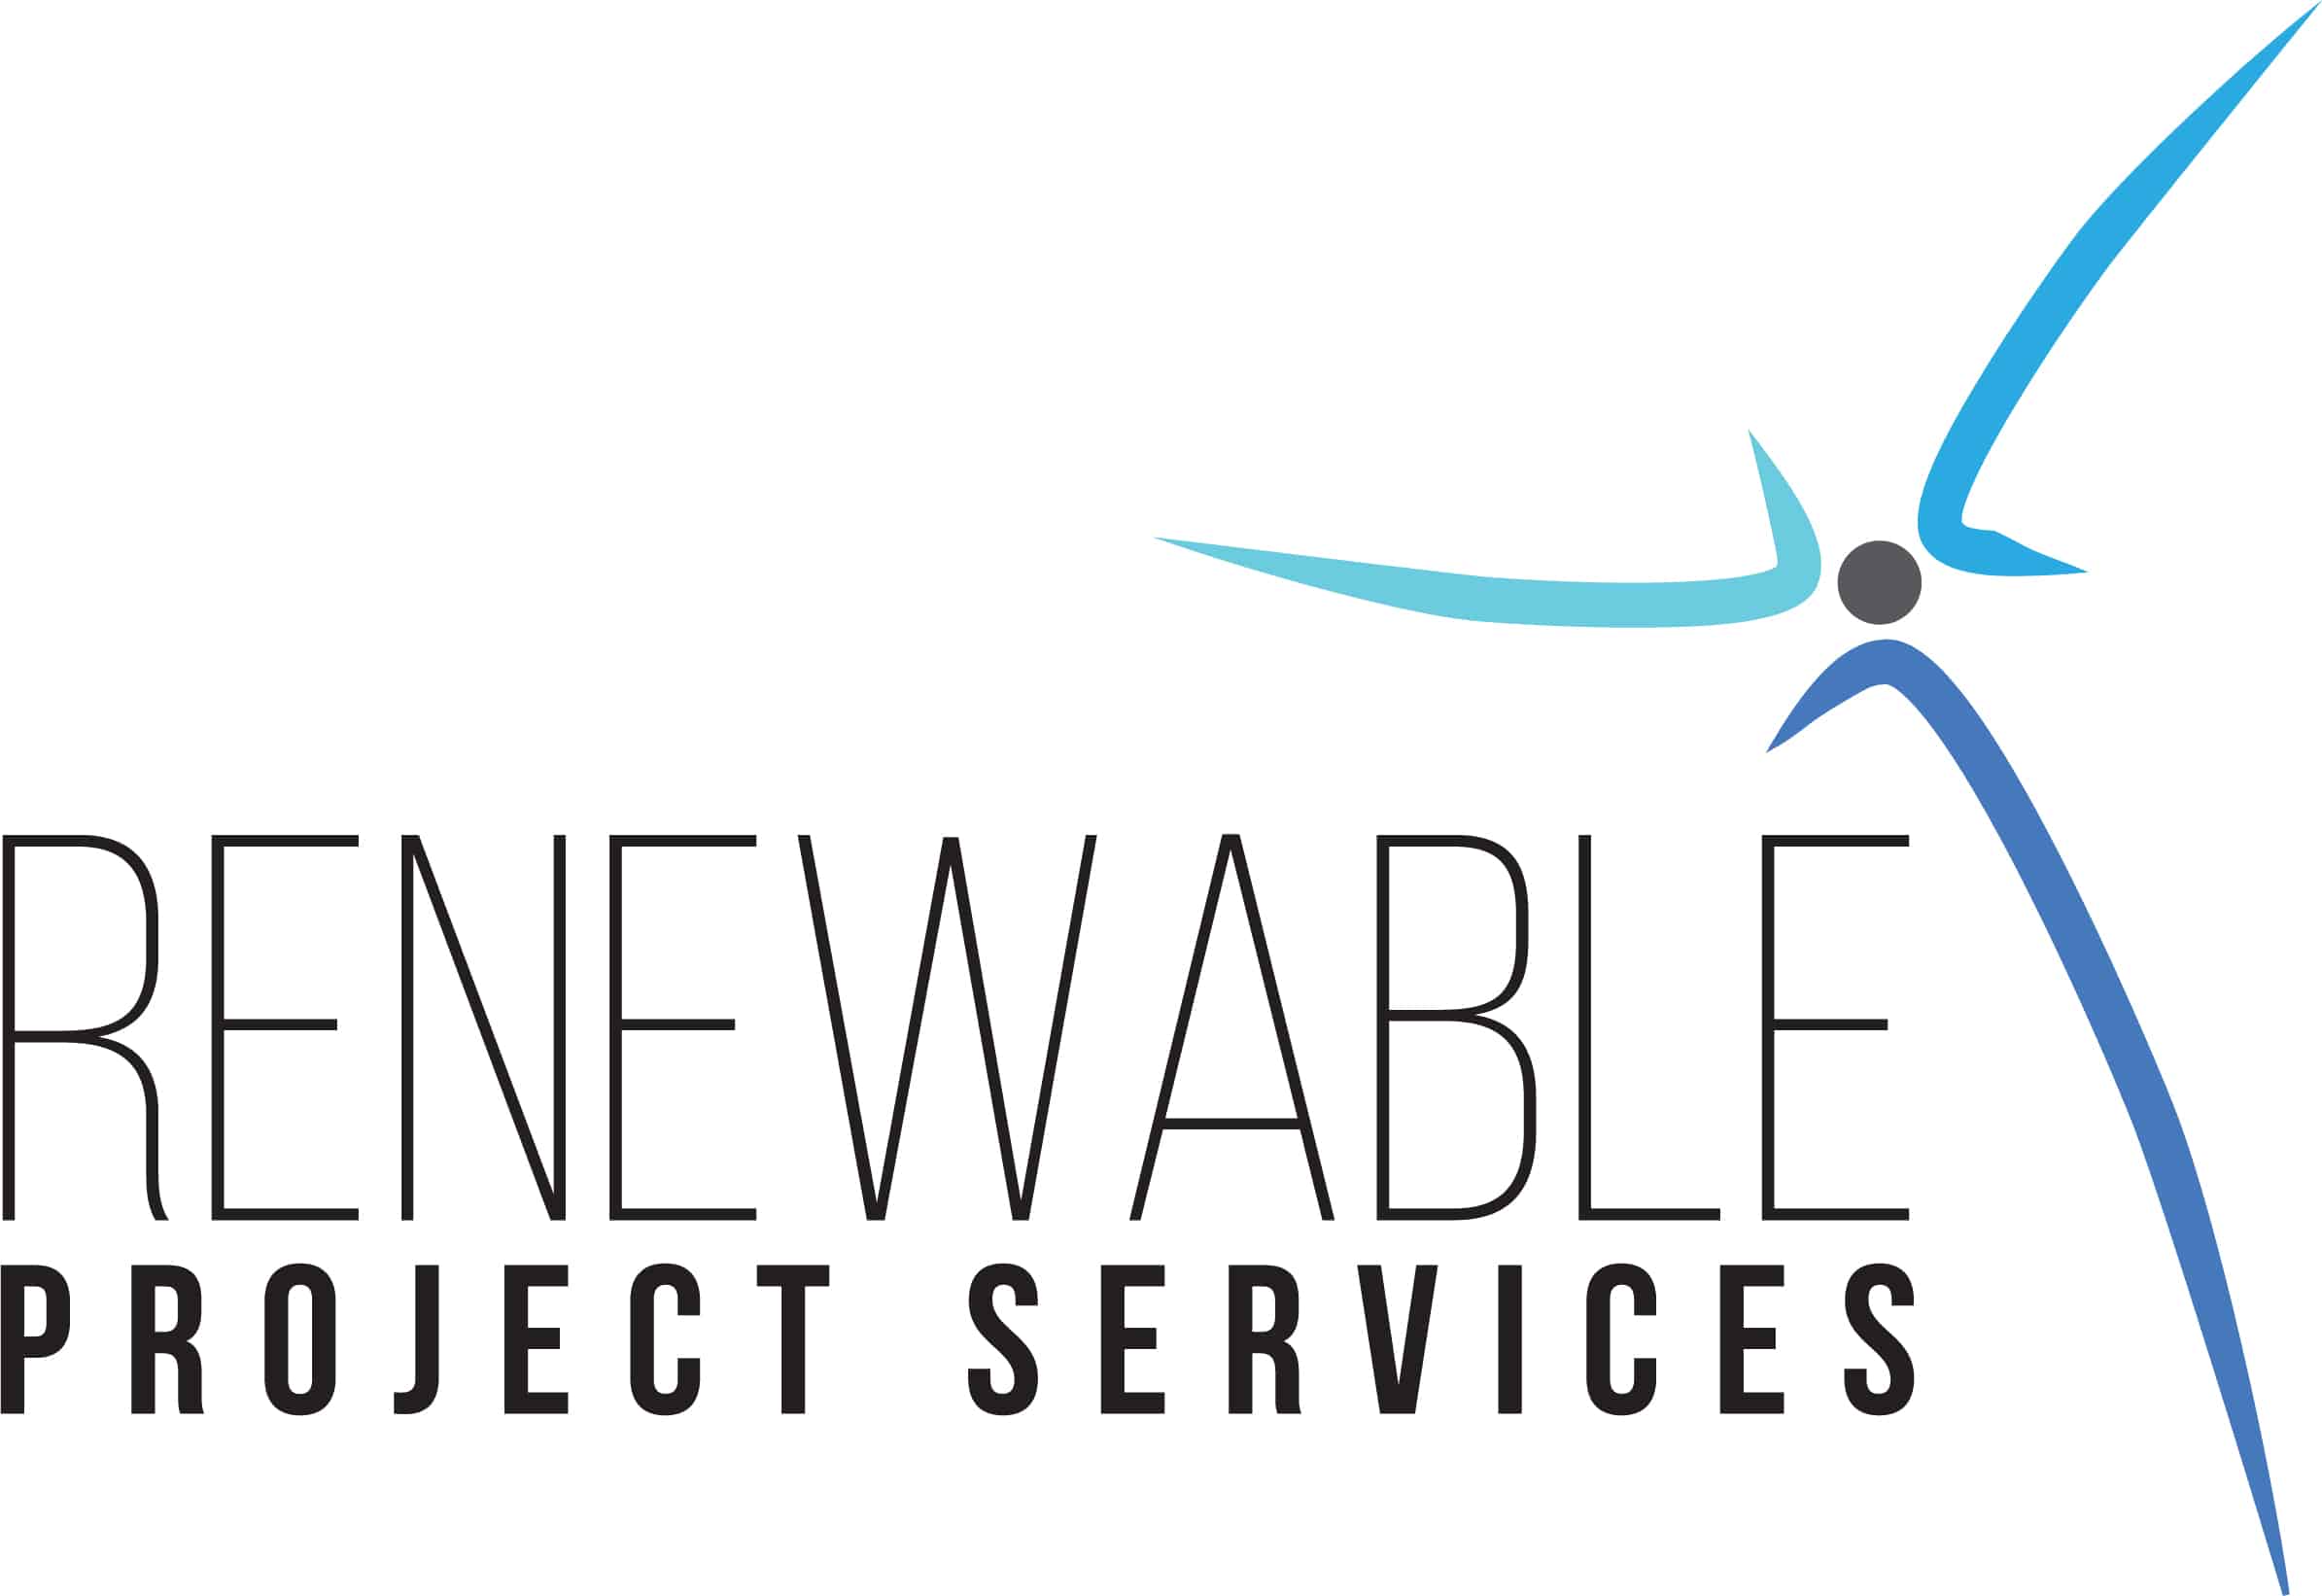 Renewable Project Services